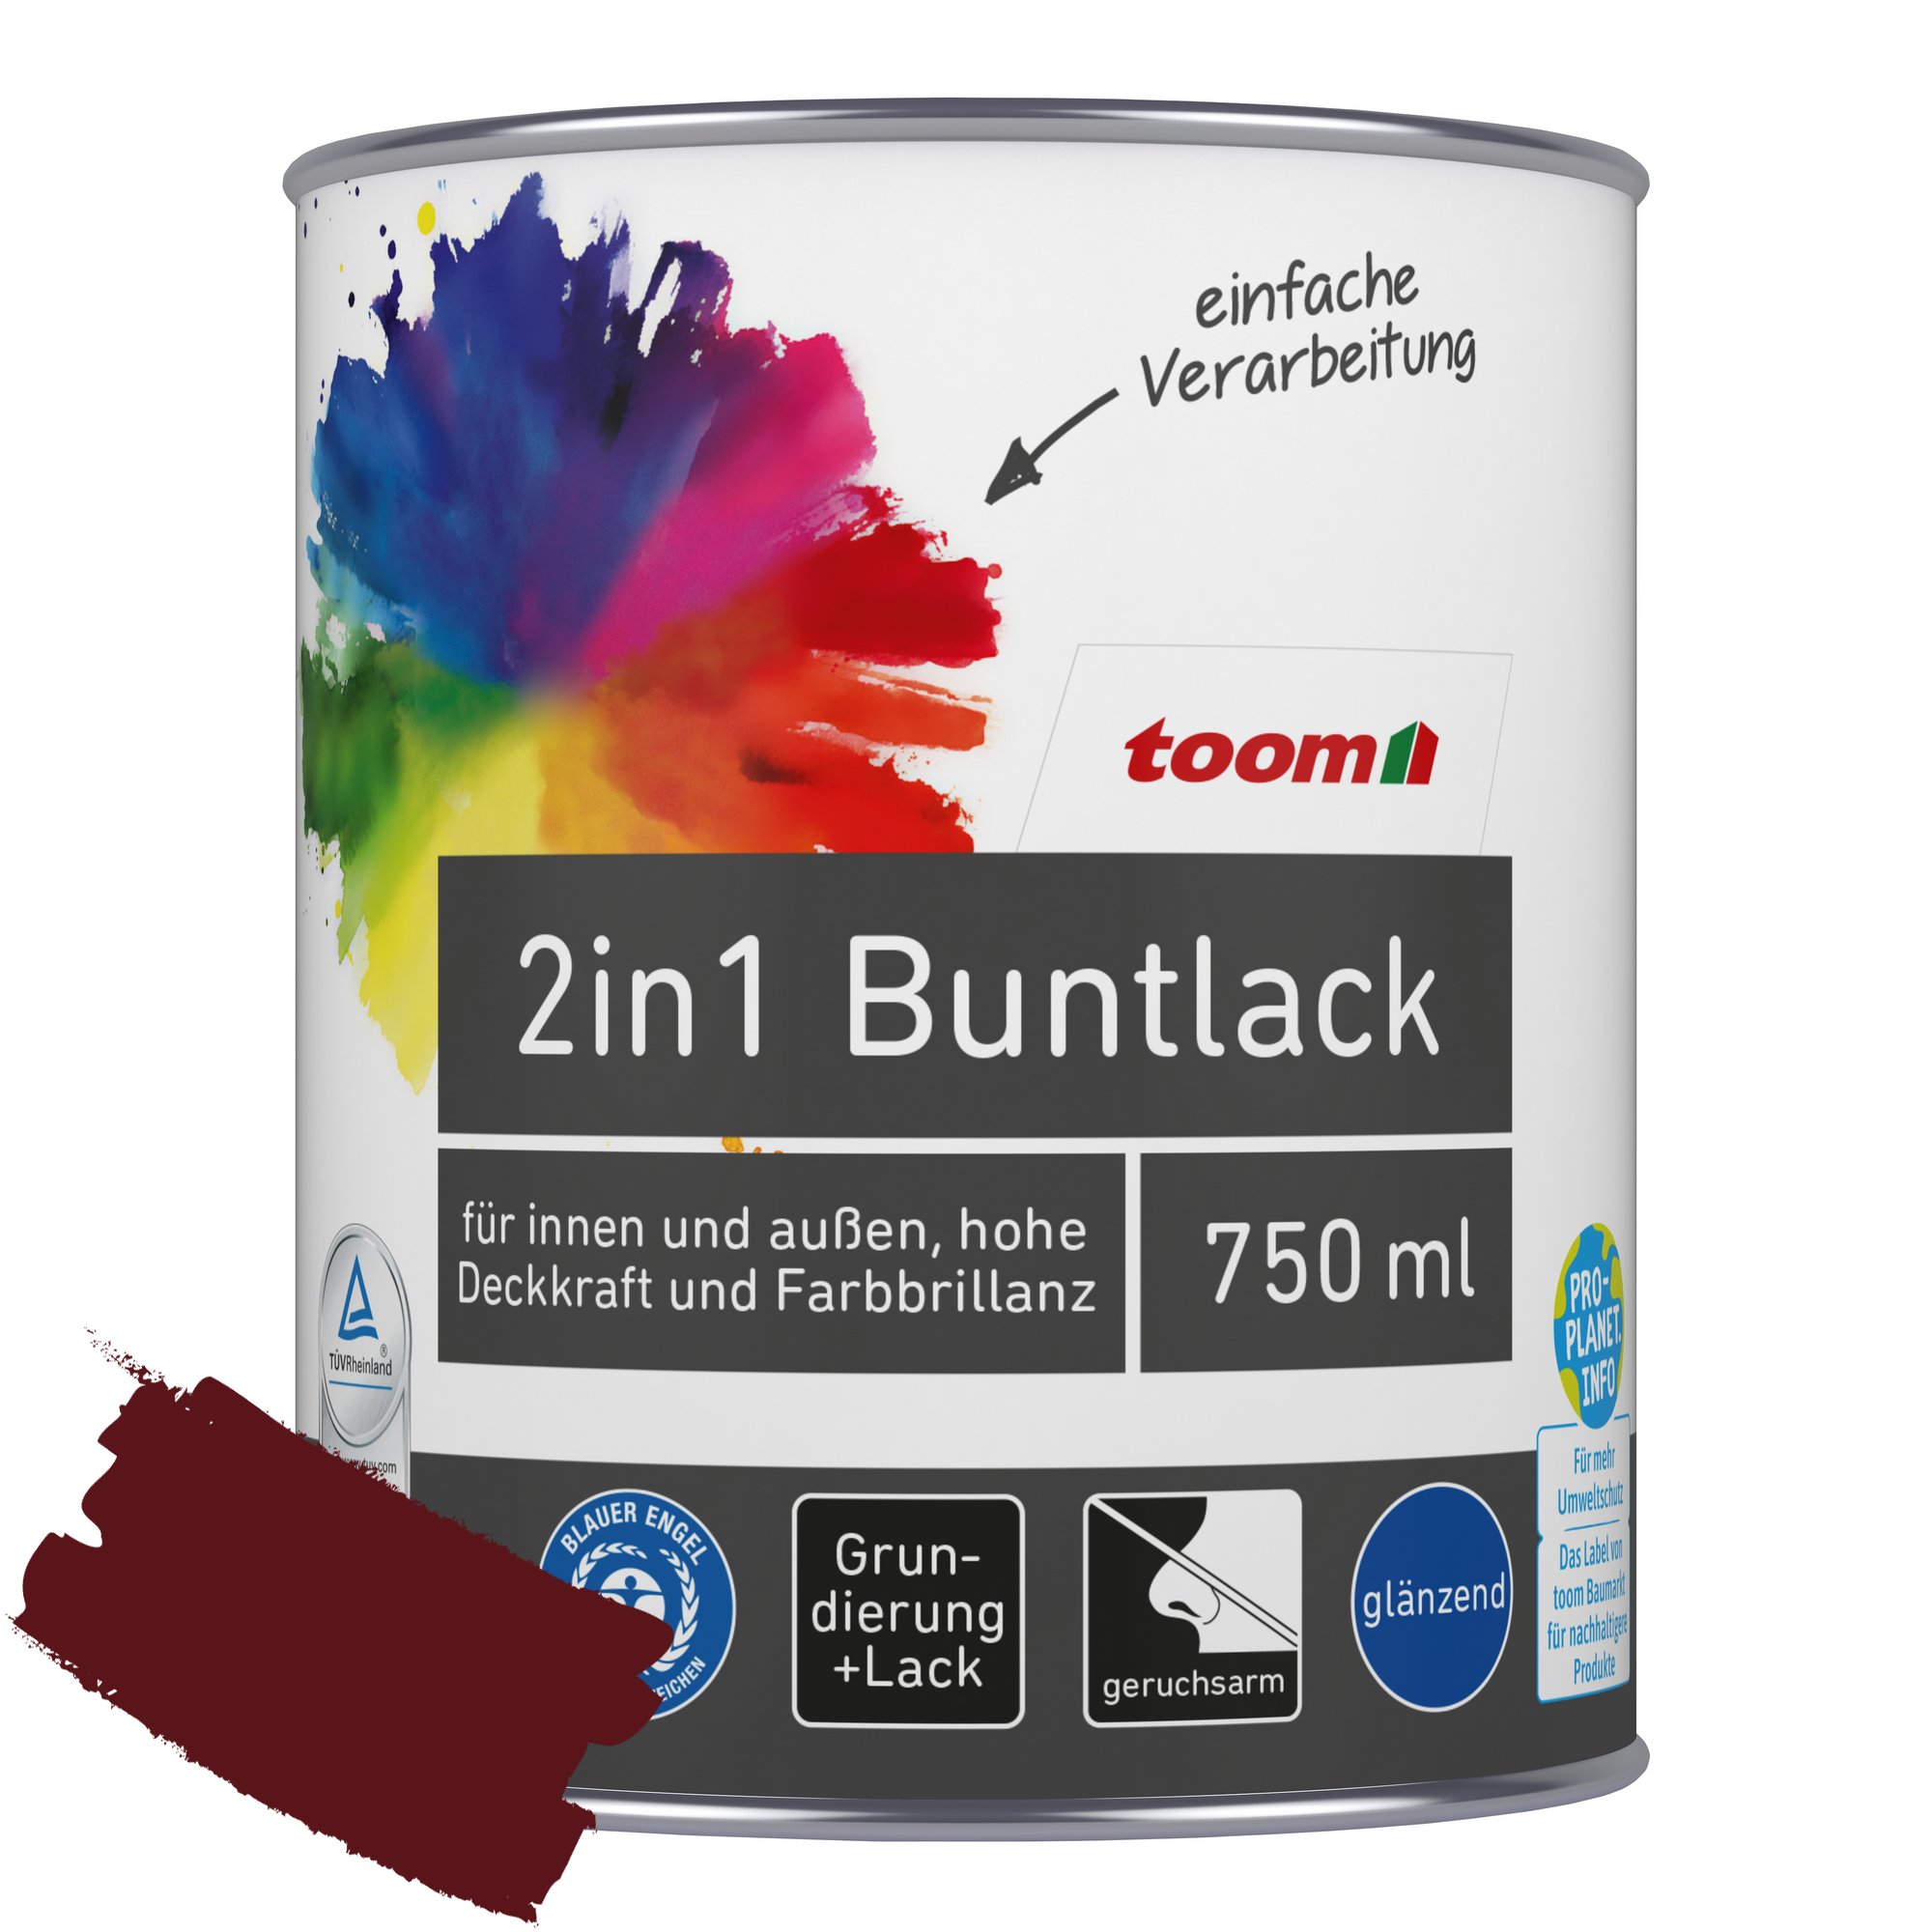 2in1 Buntlack 'Abendrot' purpurrot glänzend 750 ml + product picture